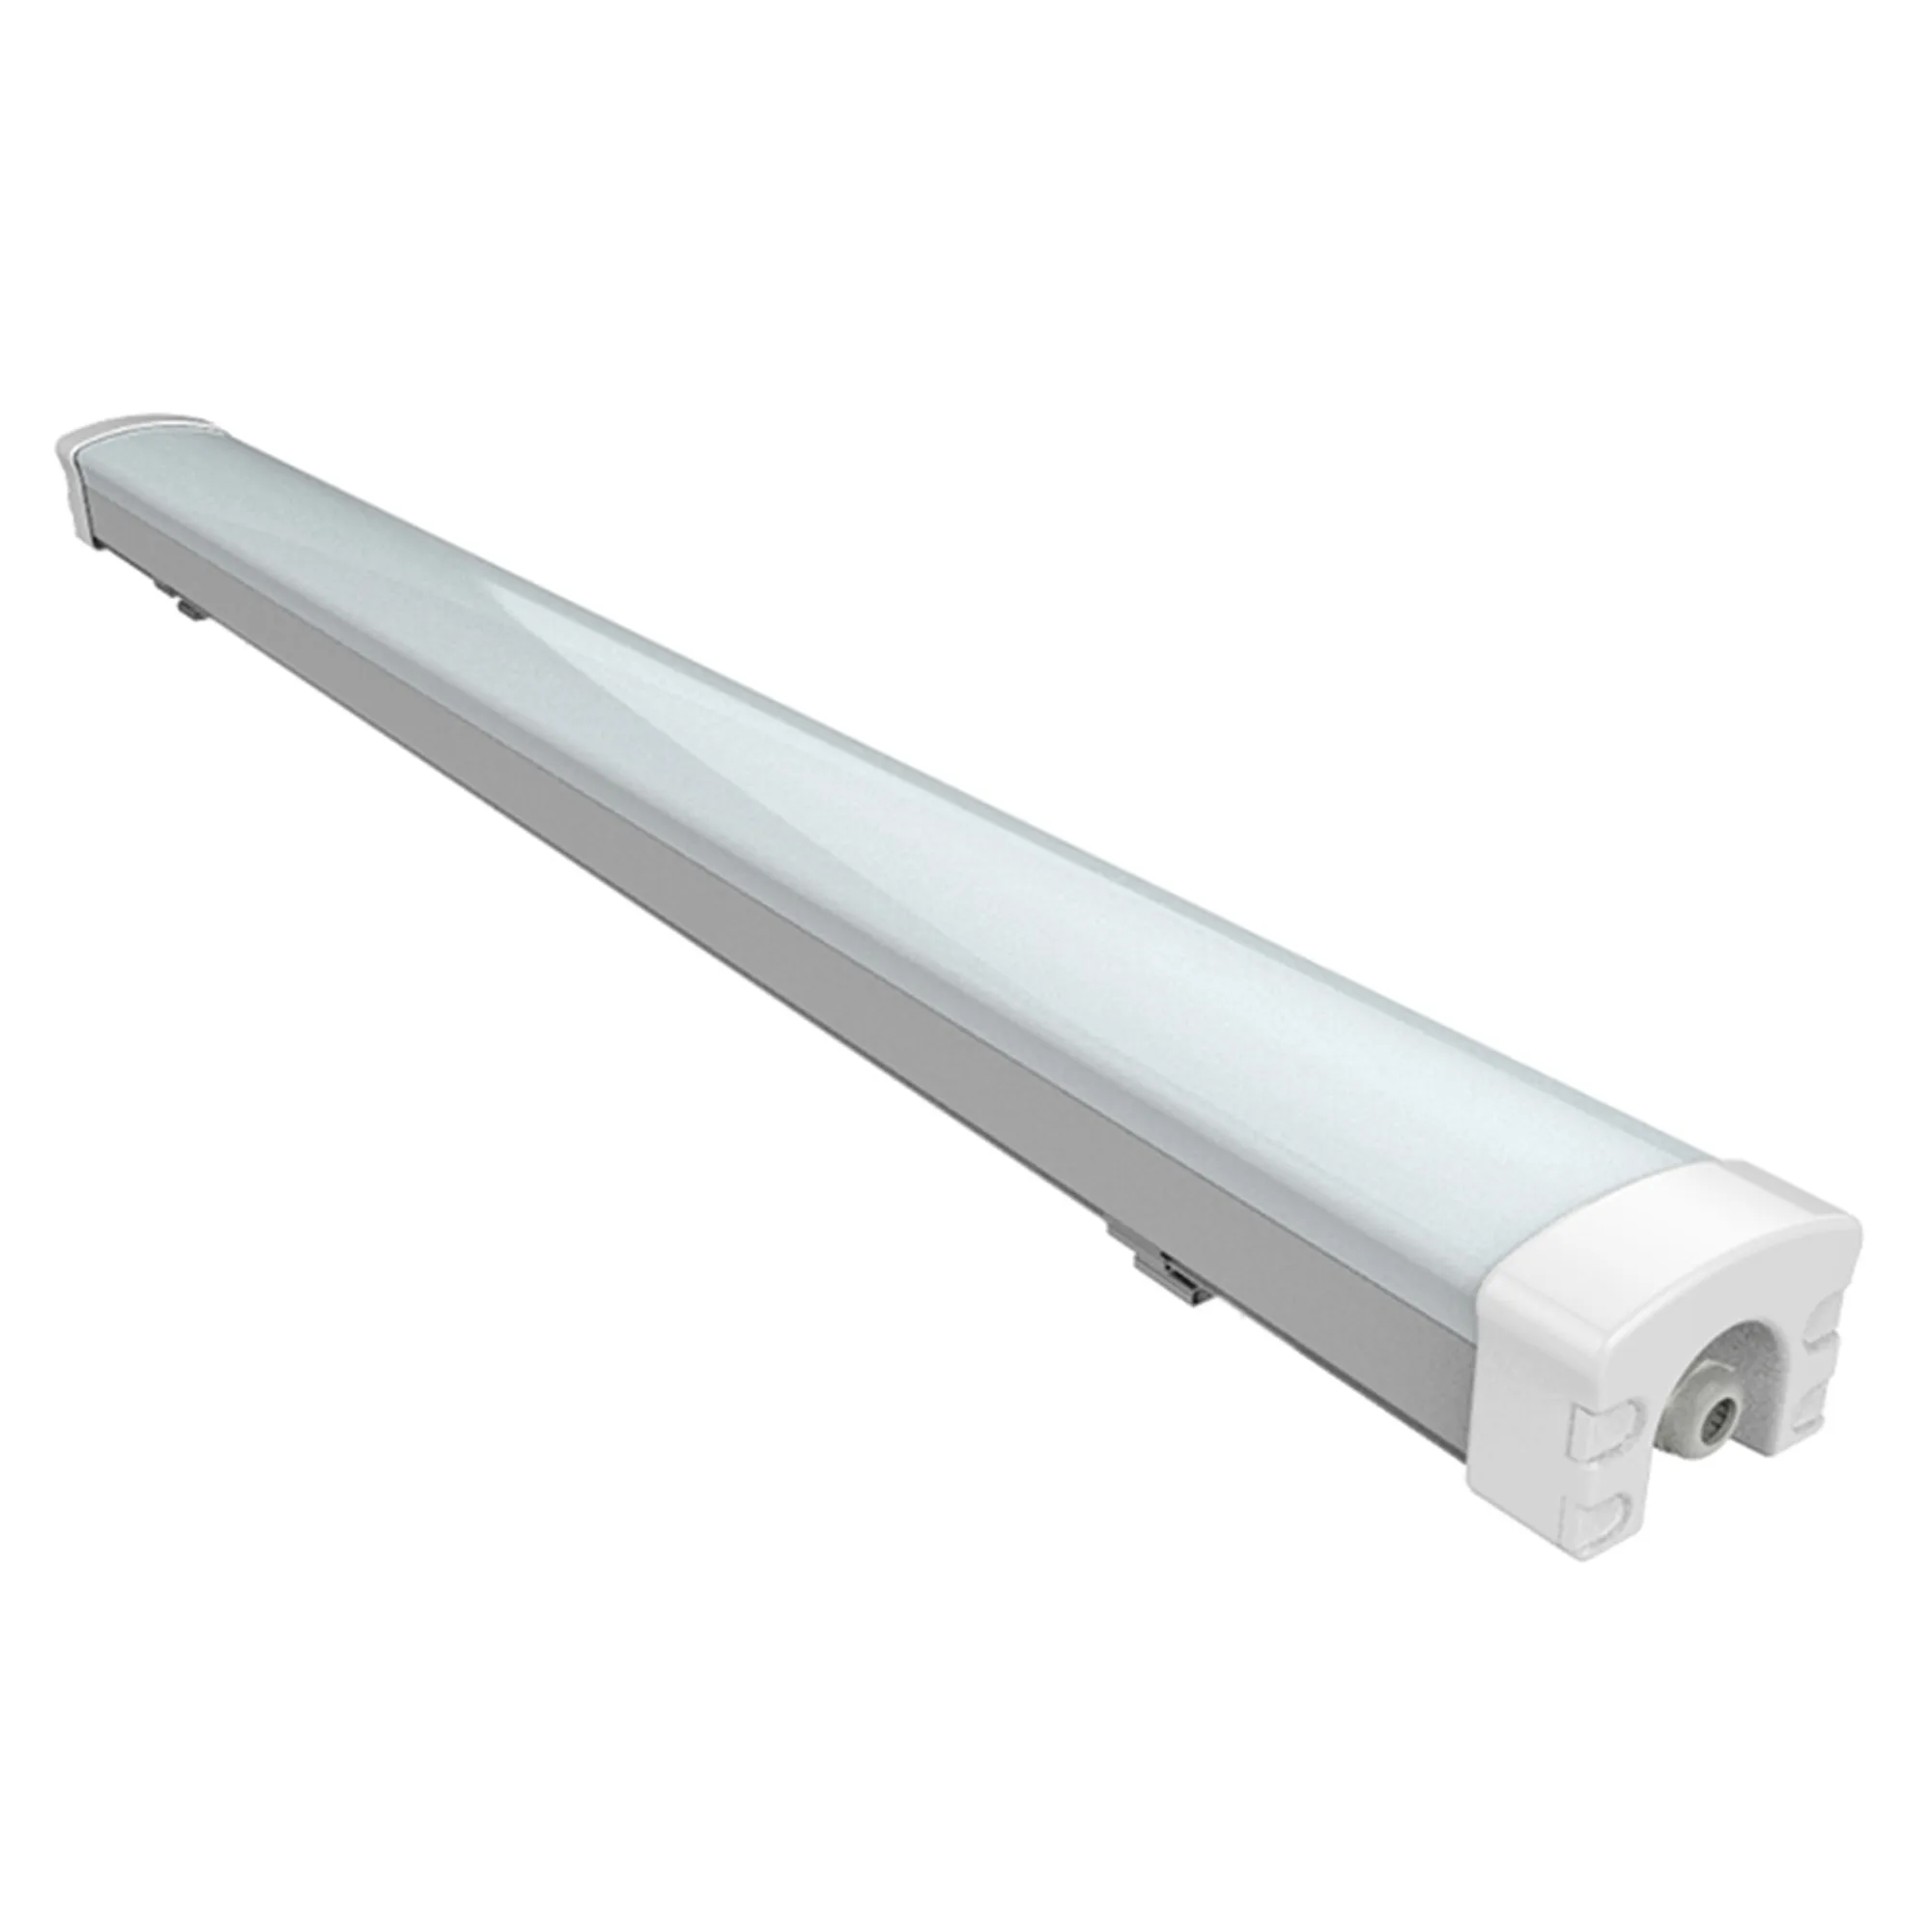 ShineLong 1500mm 50W 200-240V wholesales linkable aluminum led linear lighting fixture led batten ip65